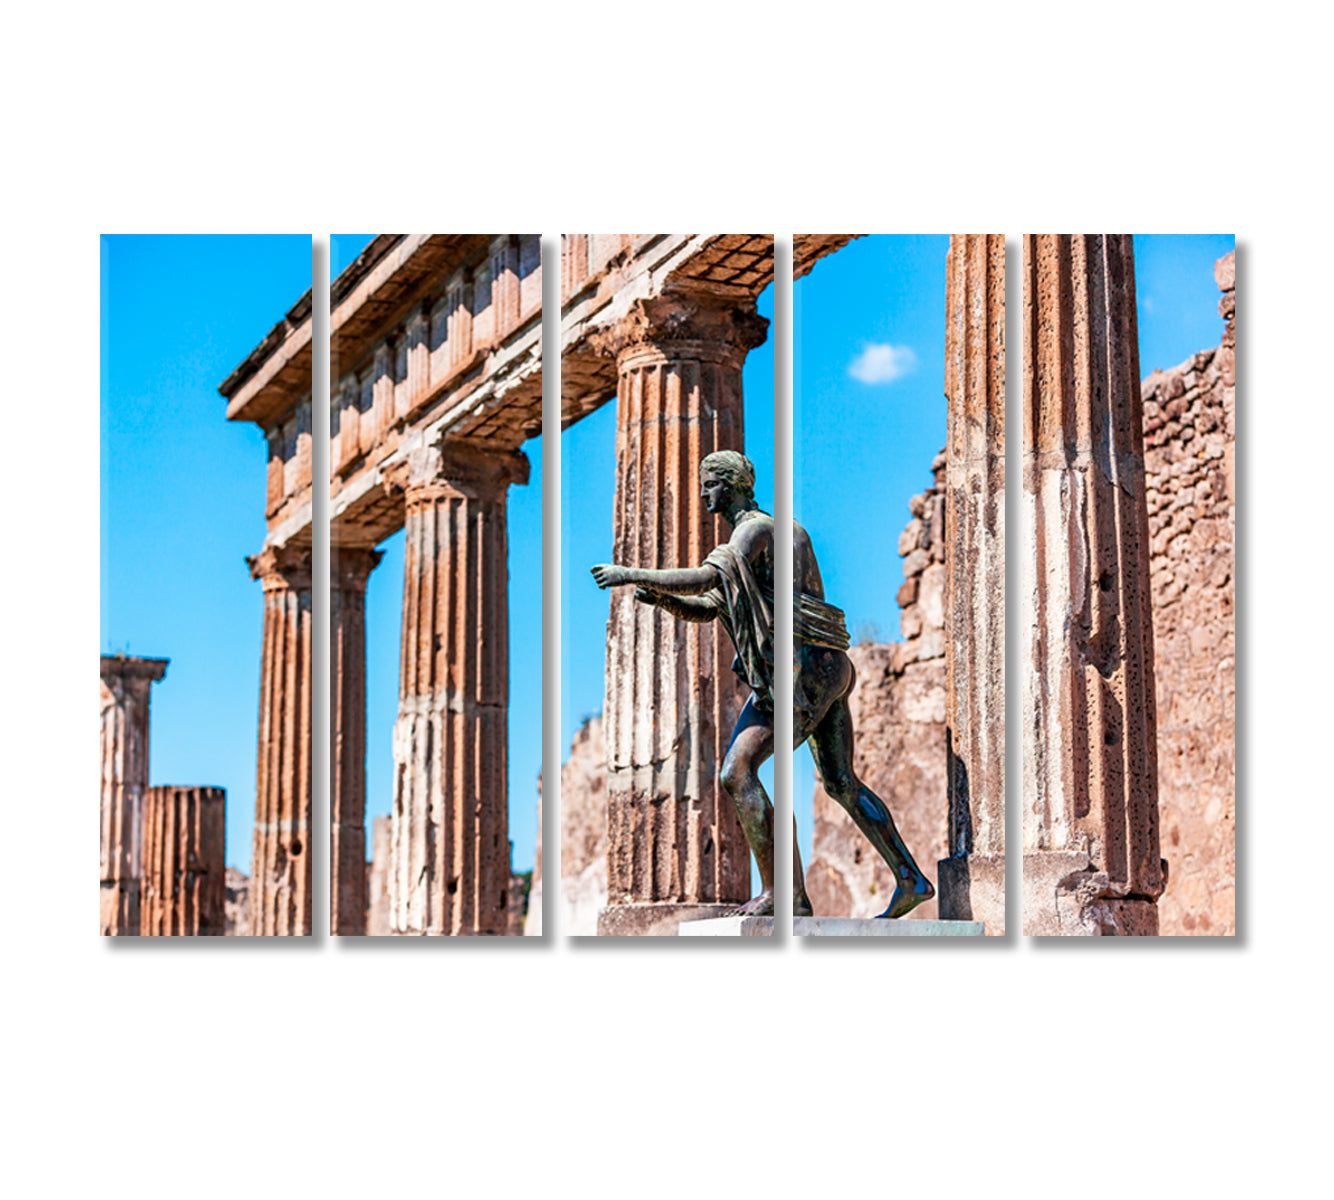 Ruins of Antique Temple of Apollo with Apollo Statue Canvas Print-Canvas Print-CetArt-5 Panels-36x24 inches-CetArt